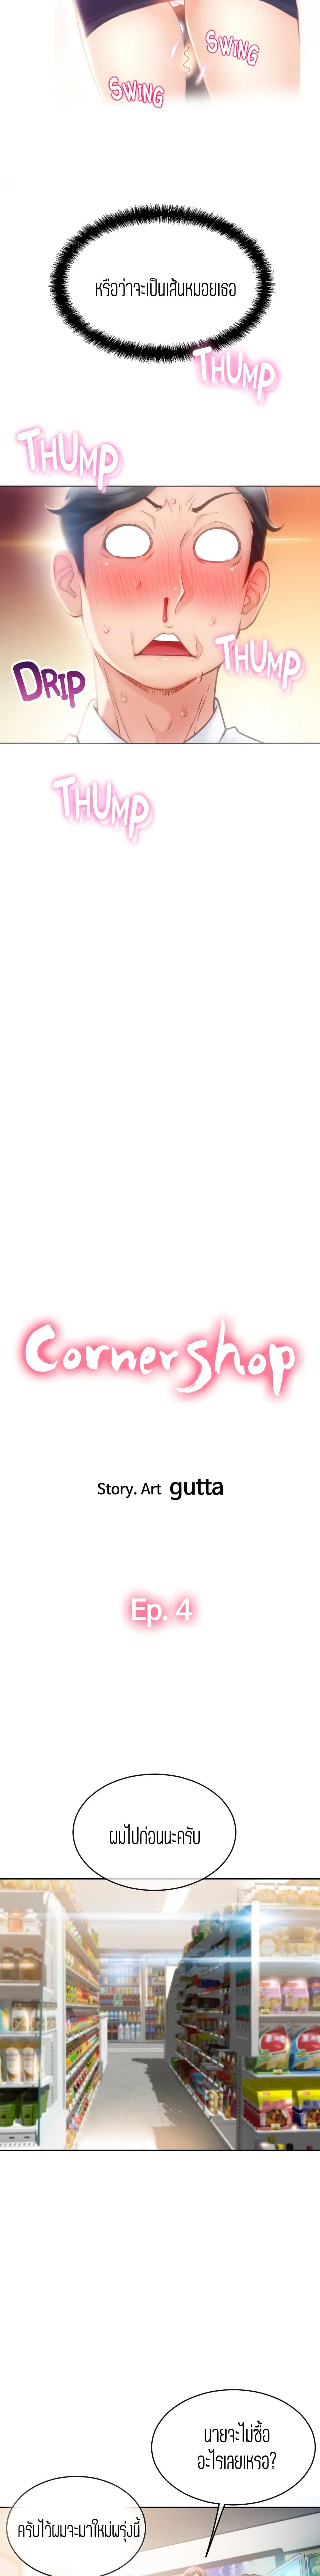 Corner Shop 4 02